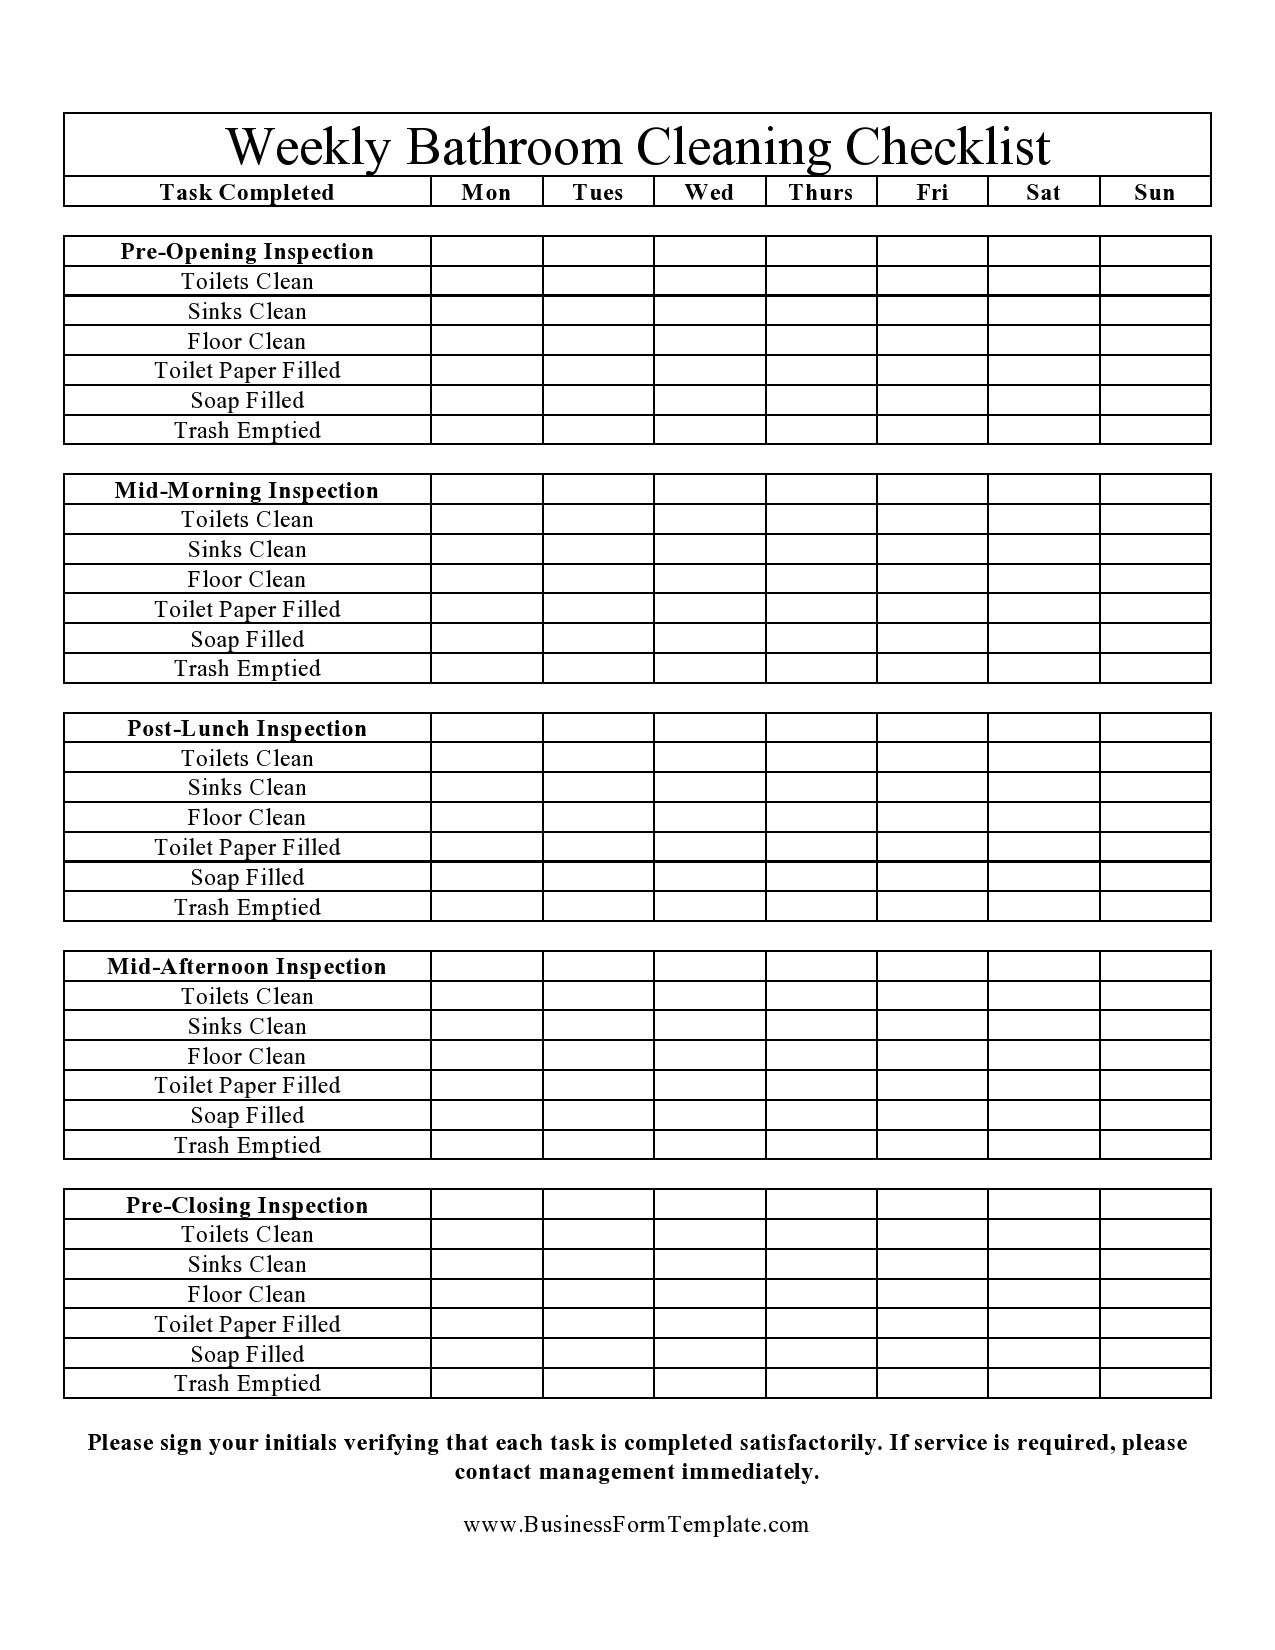 restaurant-task-list-restaurant-bathroom-cleaning-checklist-template